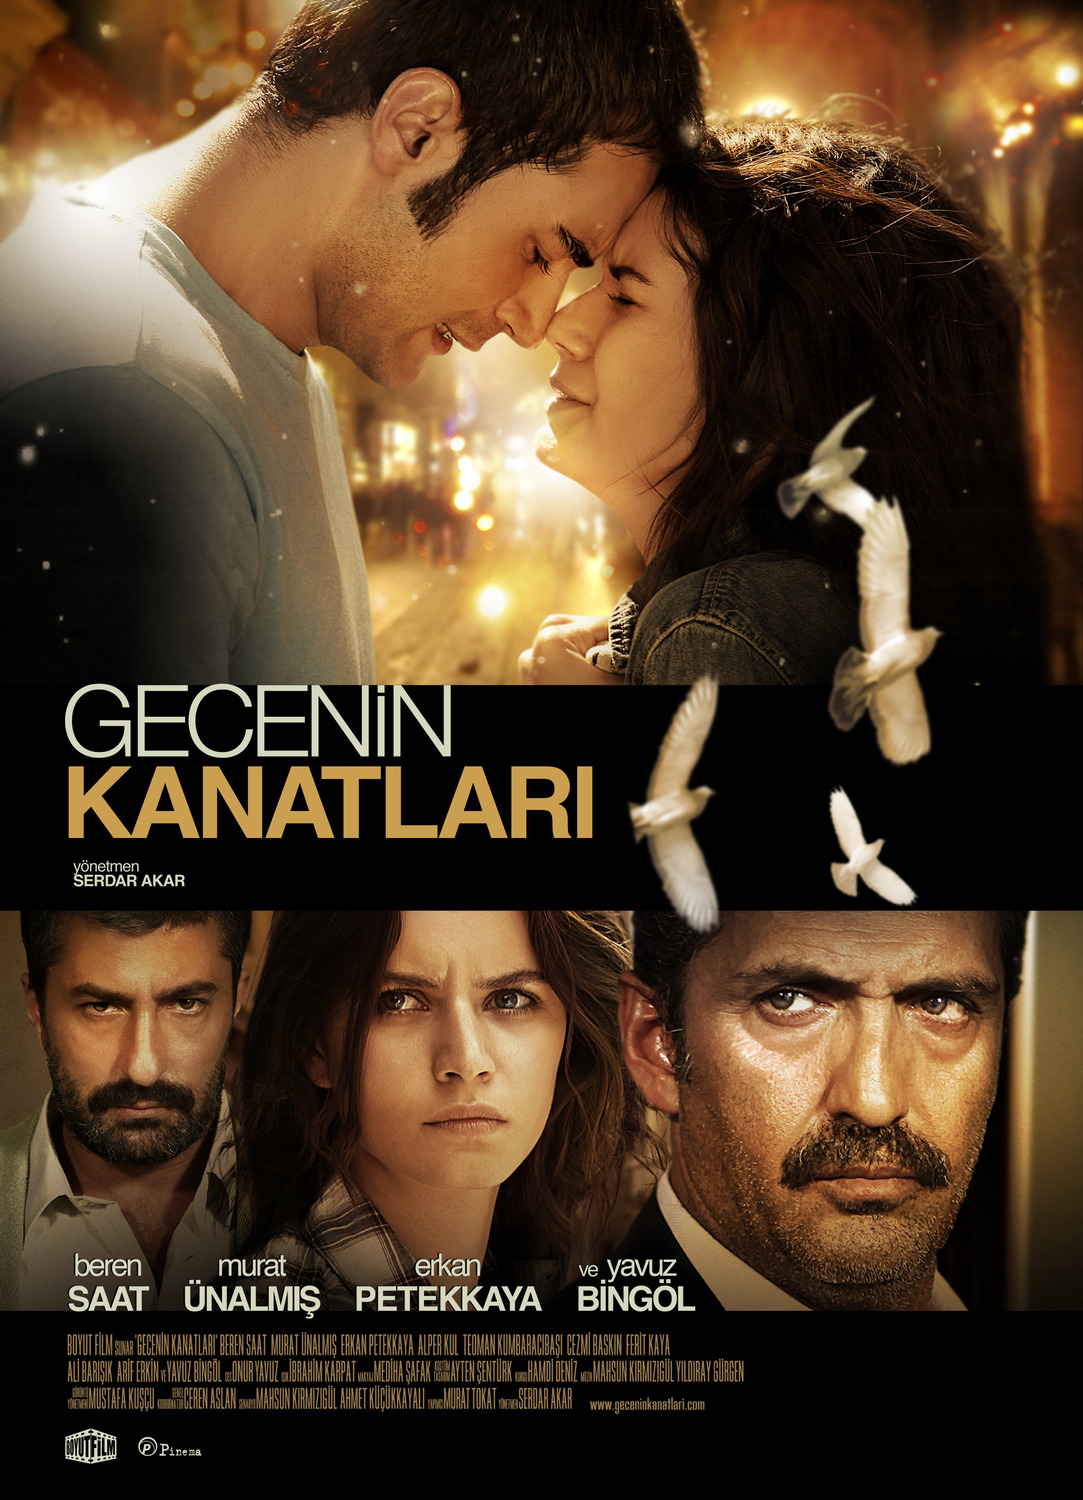 Extra Large Movie Poster Image for Gecenin Kanatlari (#1 of 2)